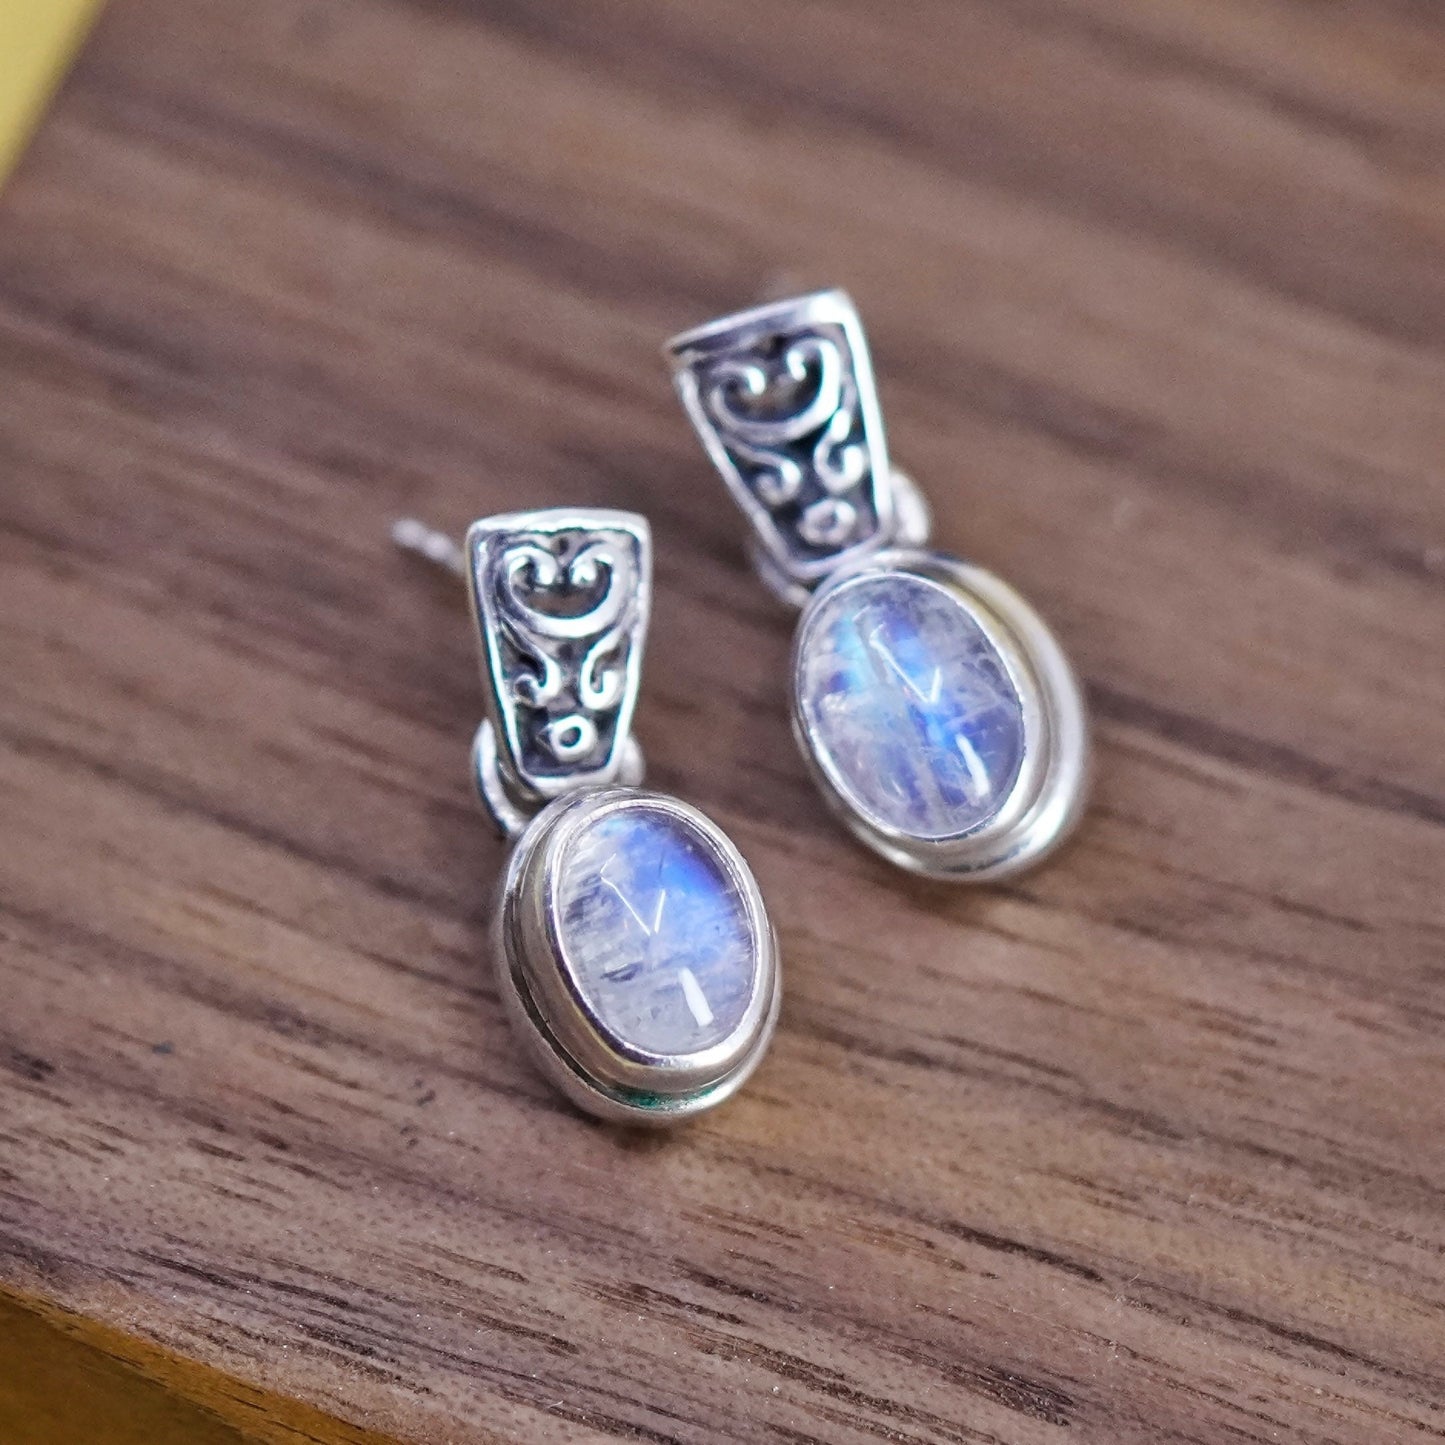 Vintage Sterling 925 silver handmade earrings with oval moonstone